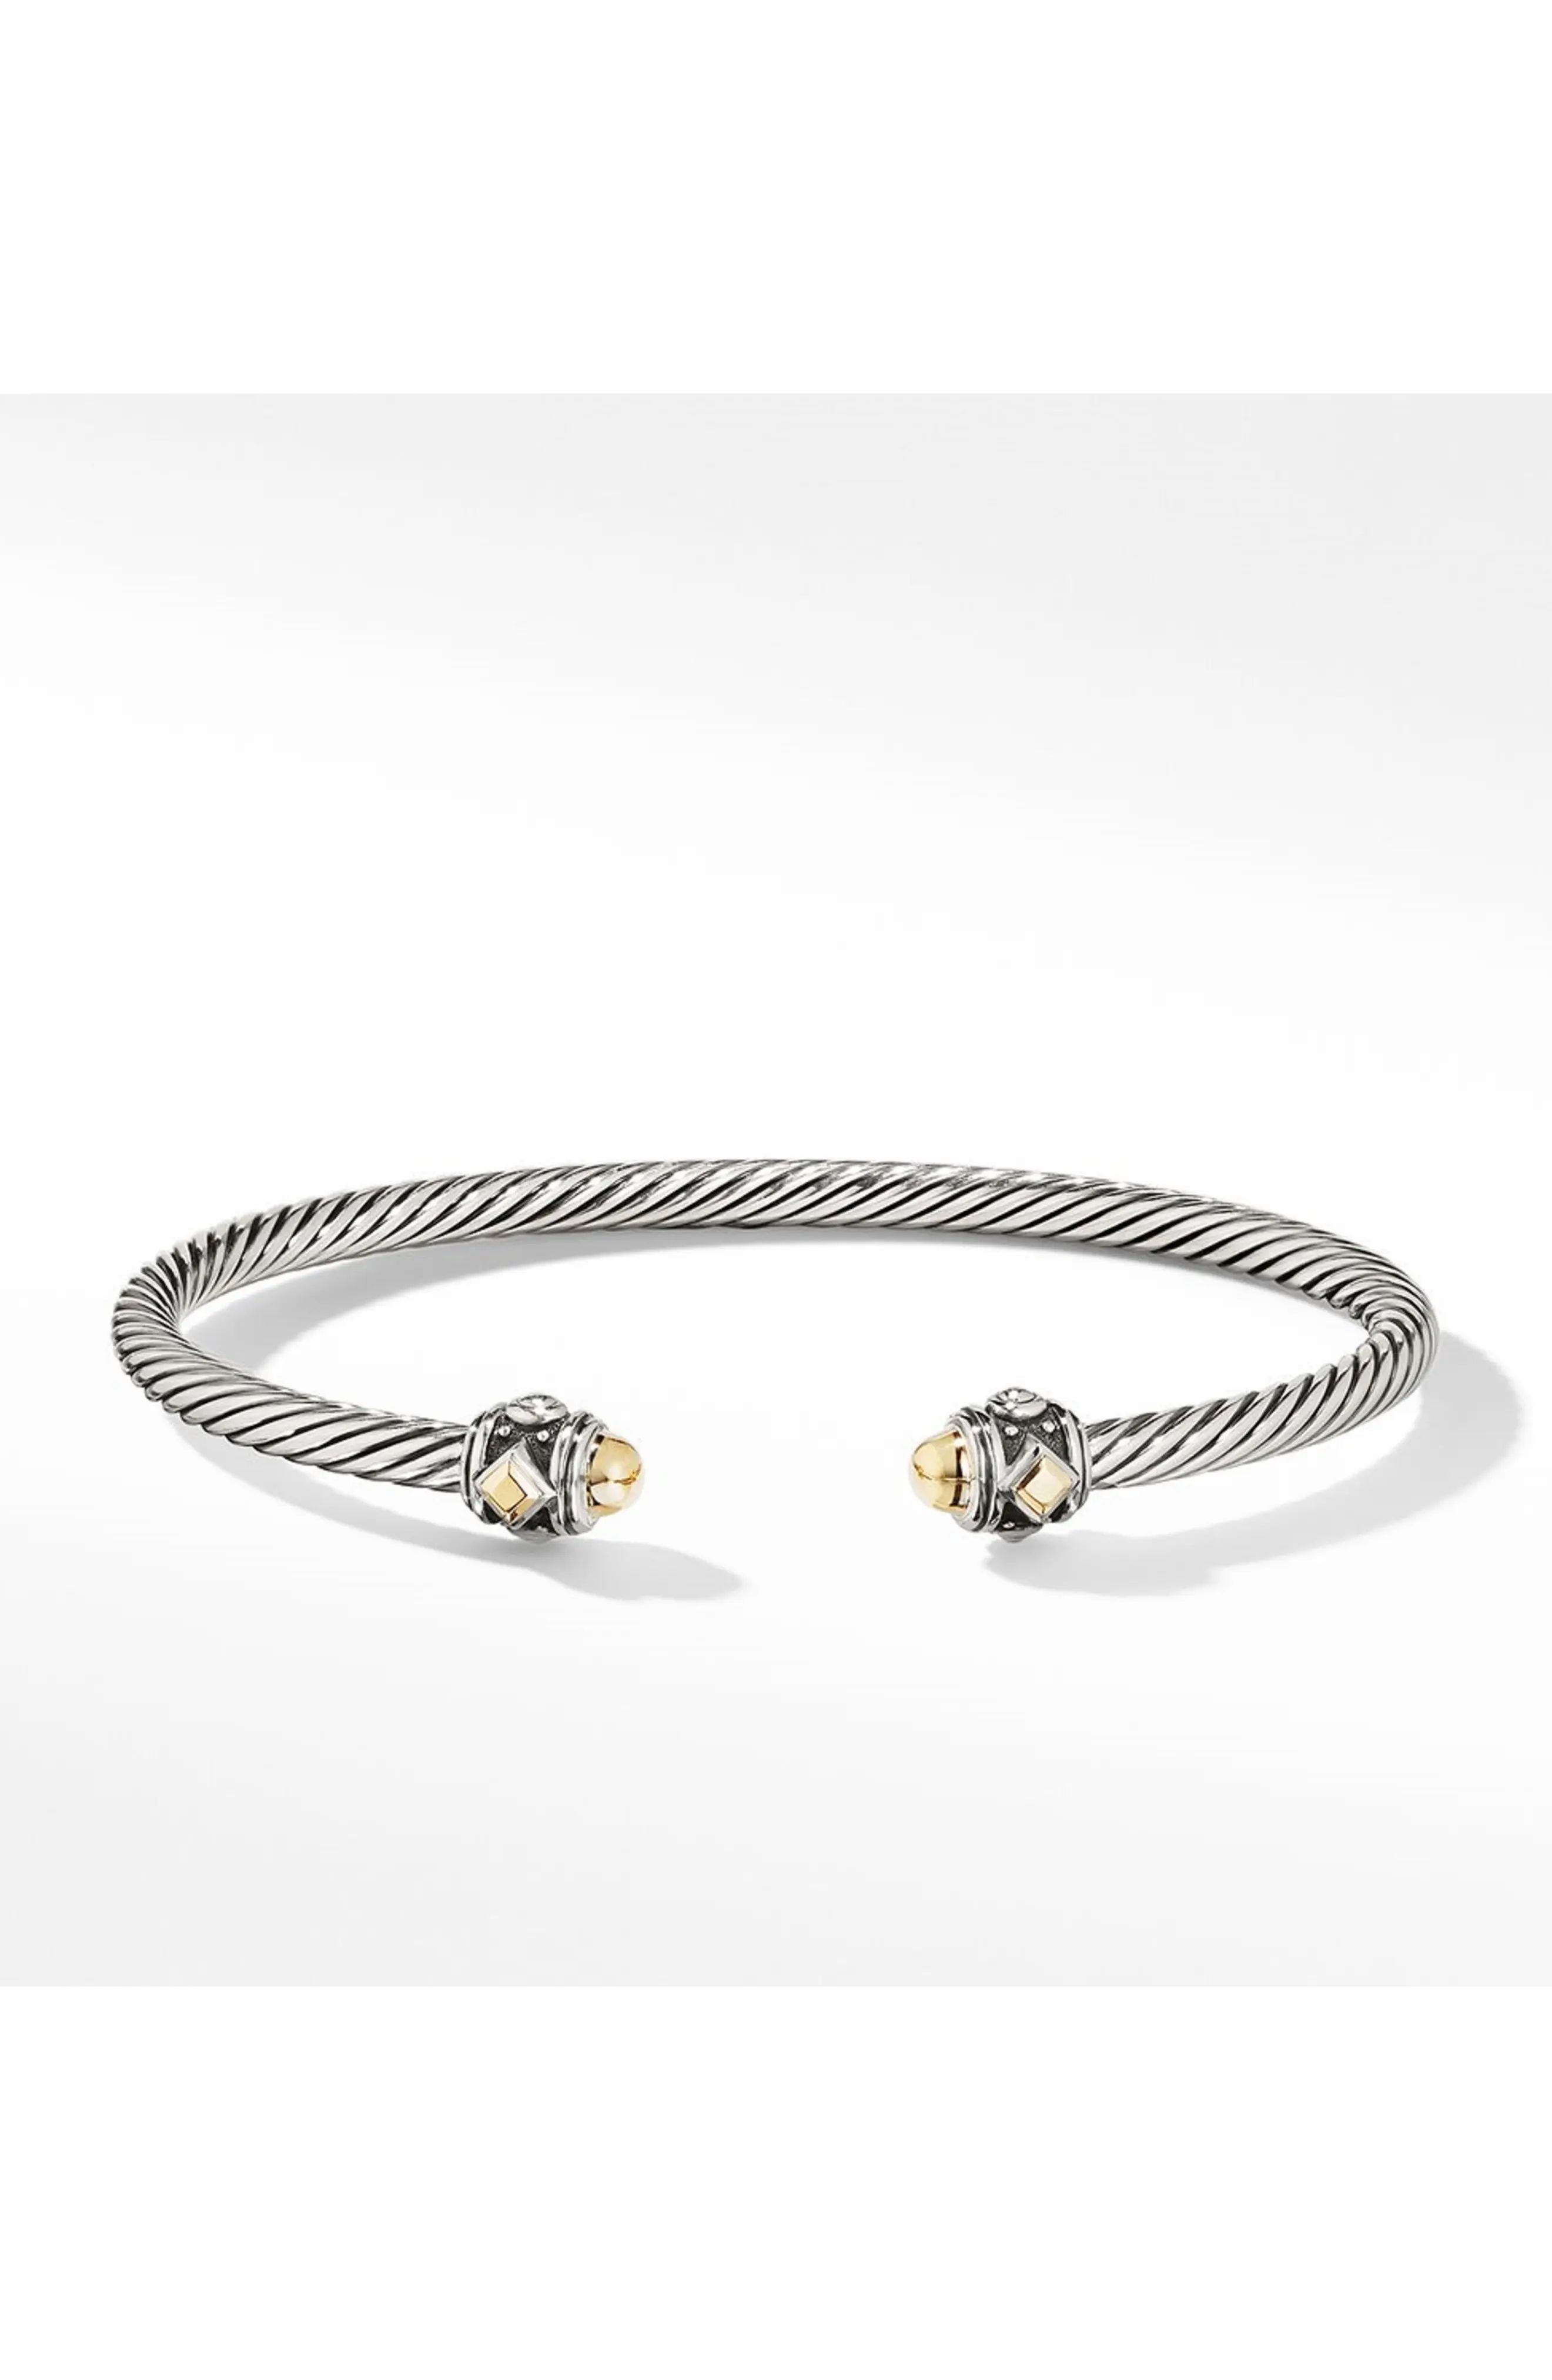 Women's David Yurman Renaissance Bracelet With 18K Gold | Nordstrom